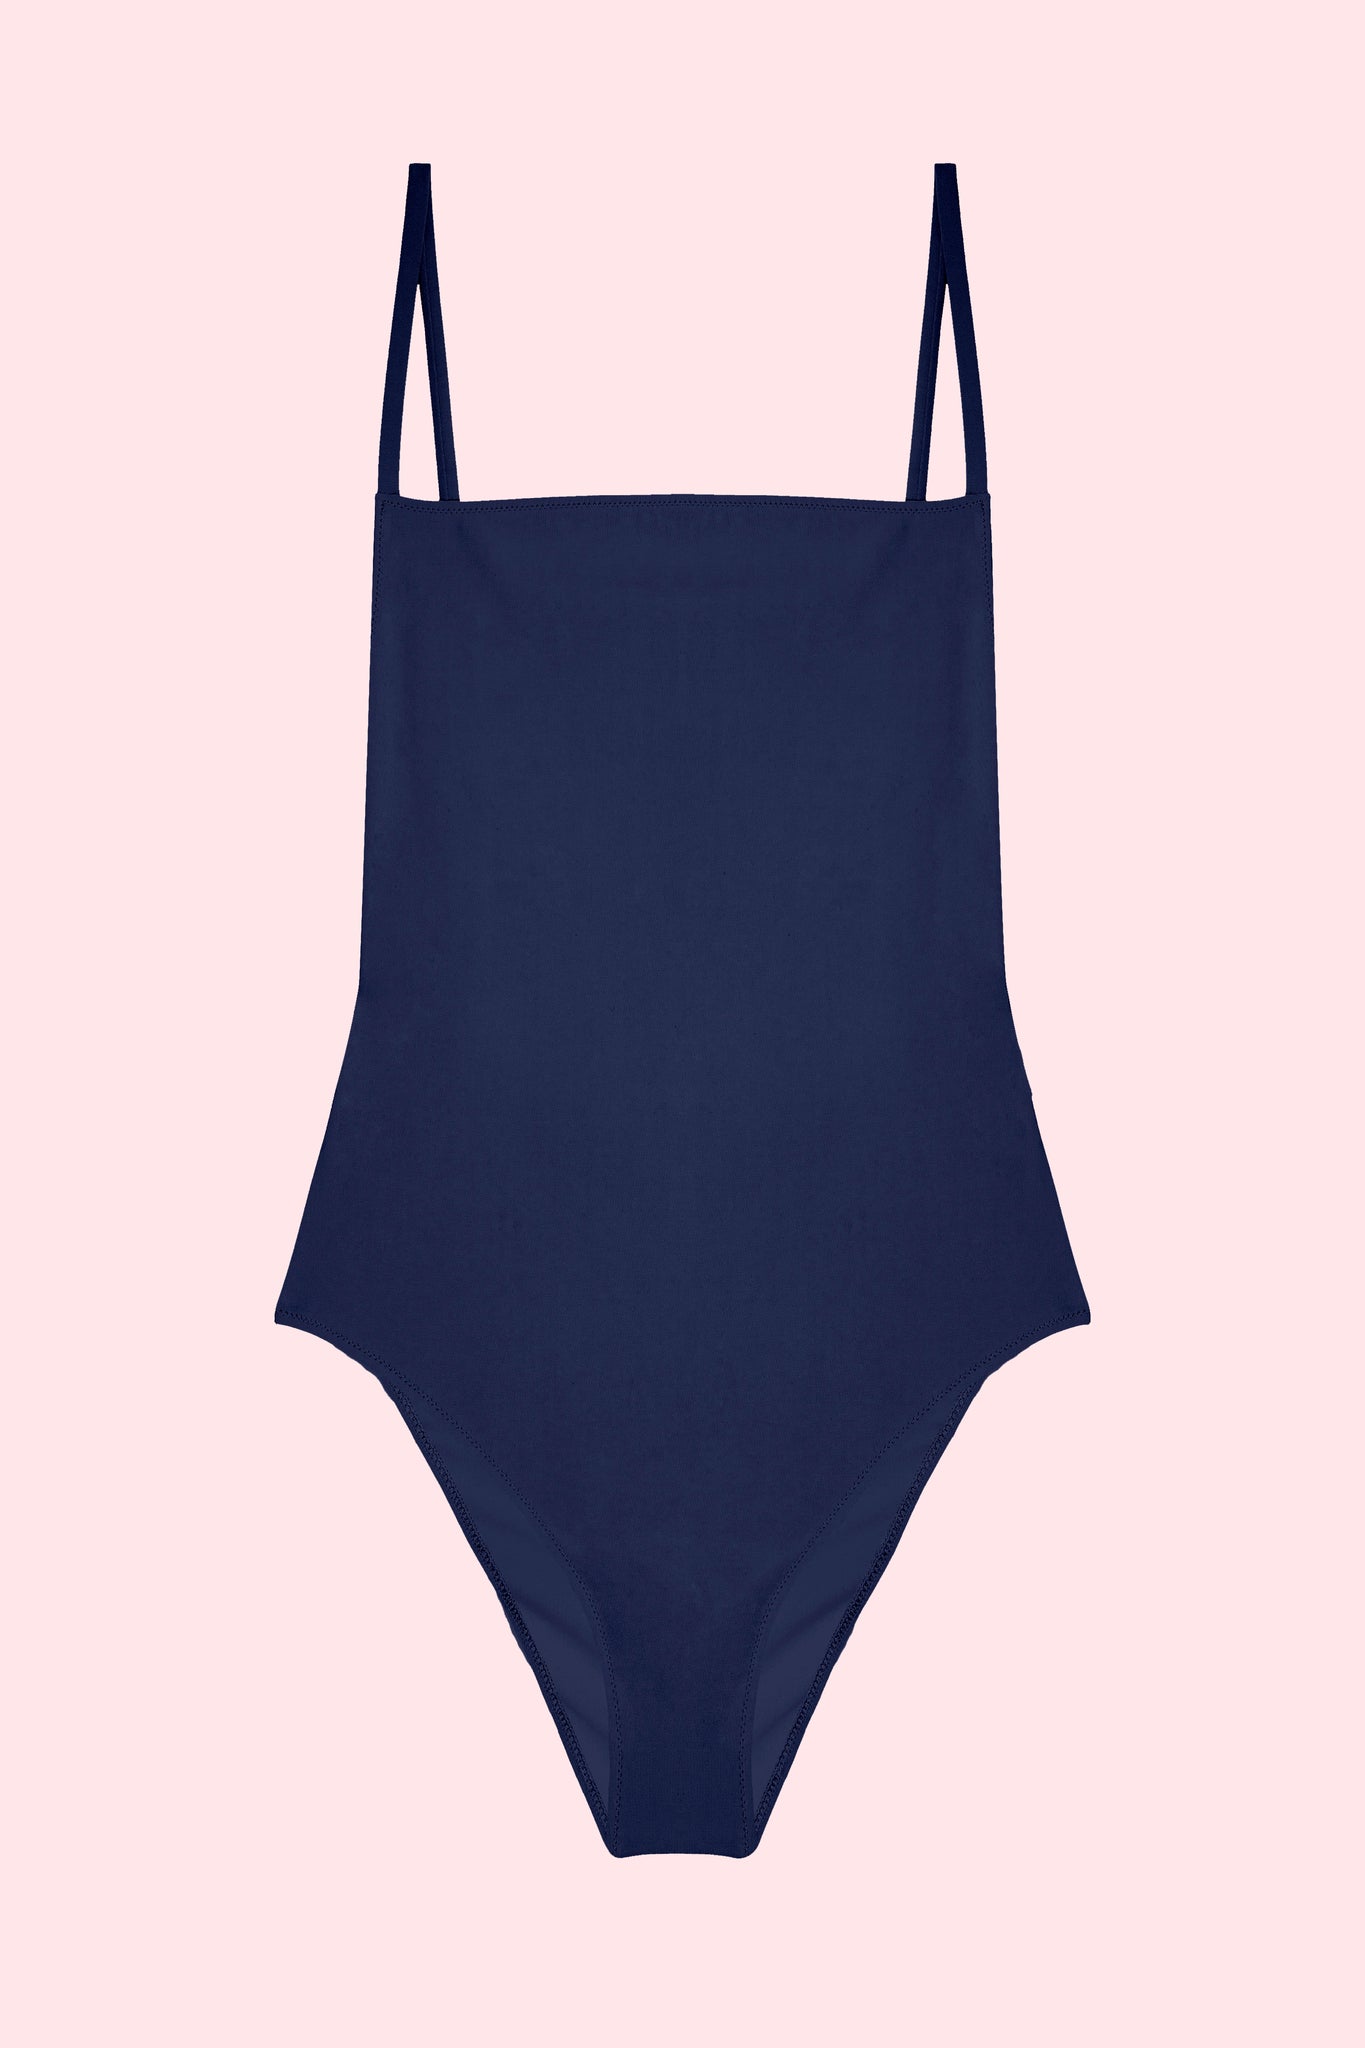 Lido swimsuit Tre navy blue product shot 